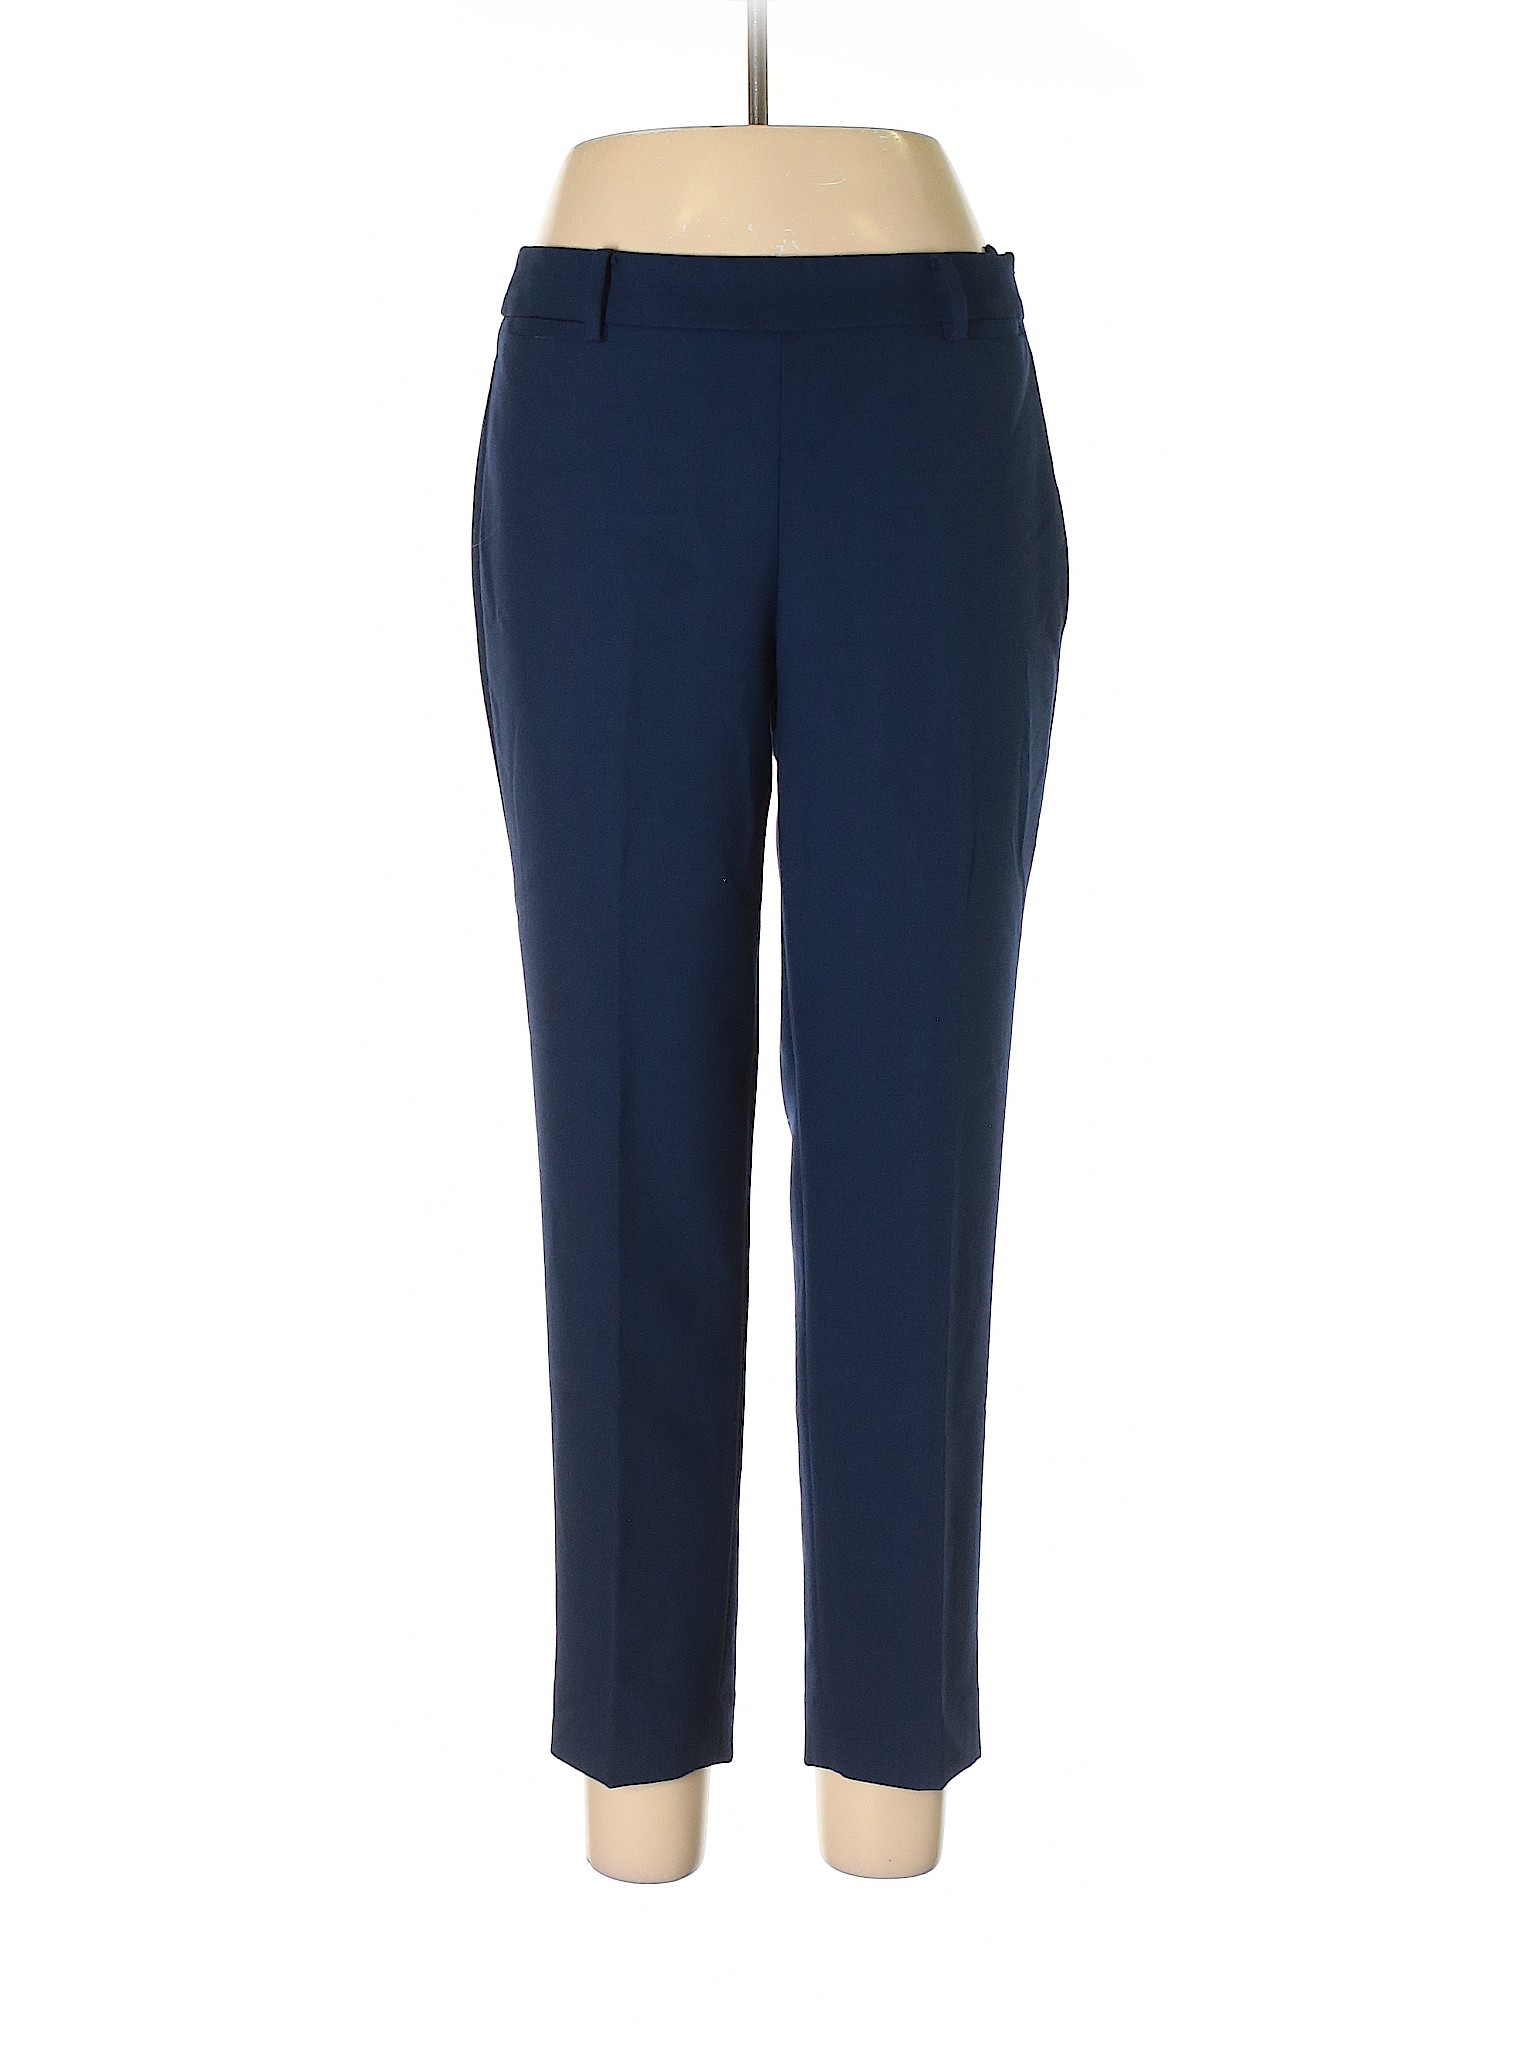 Talbots Women Blue Wool Pants 10 Petites | eBay